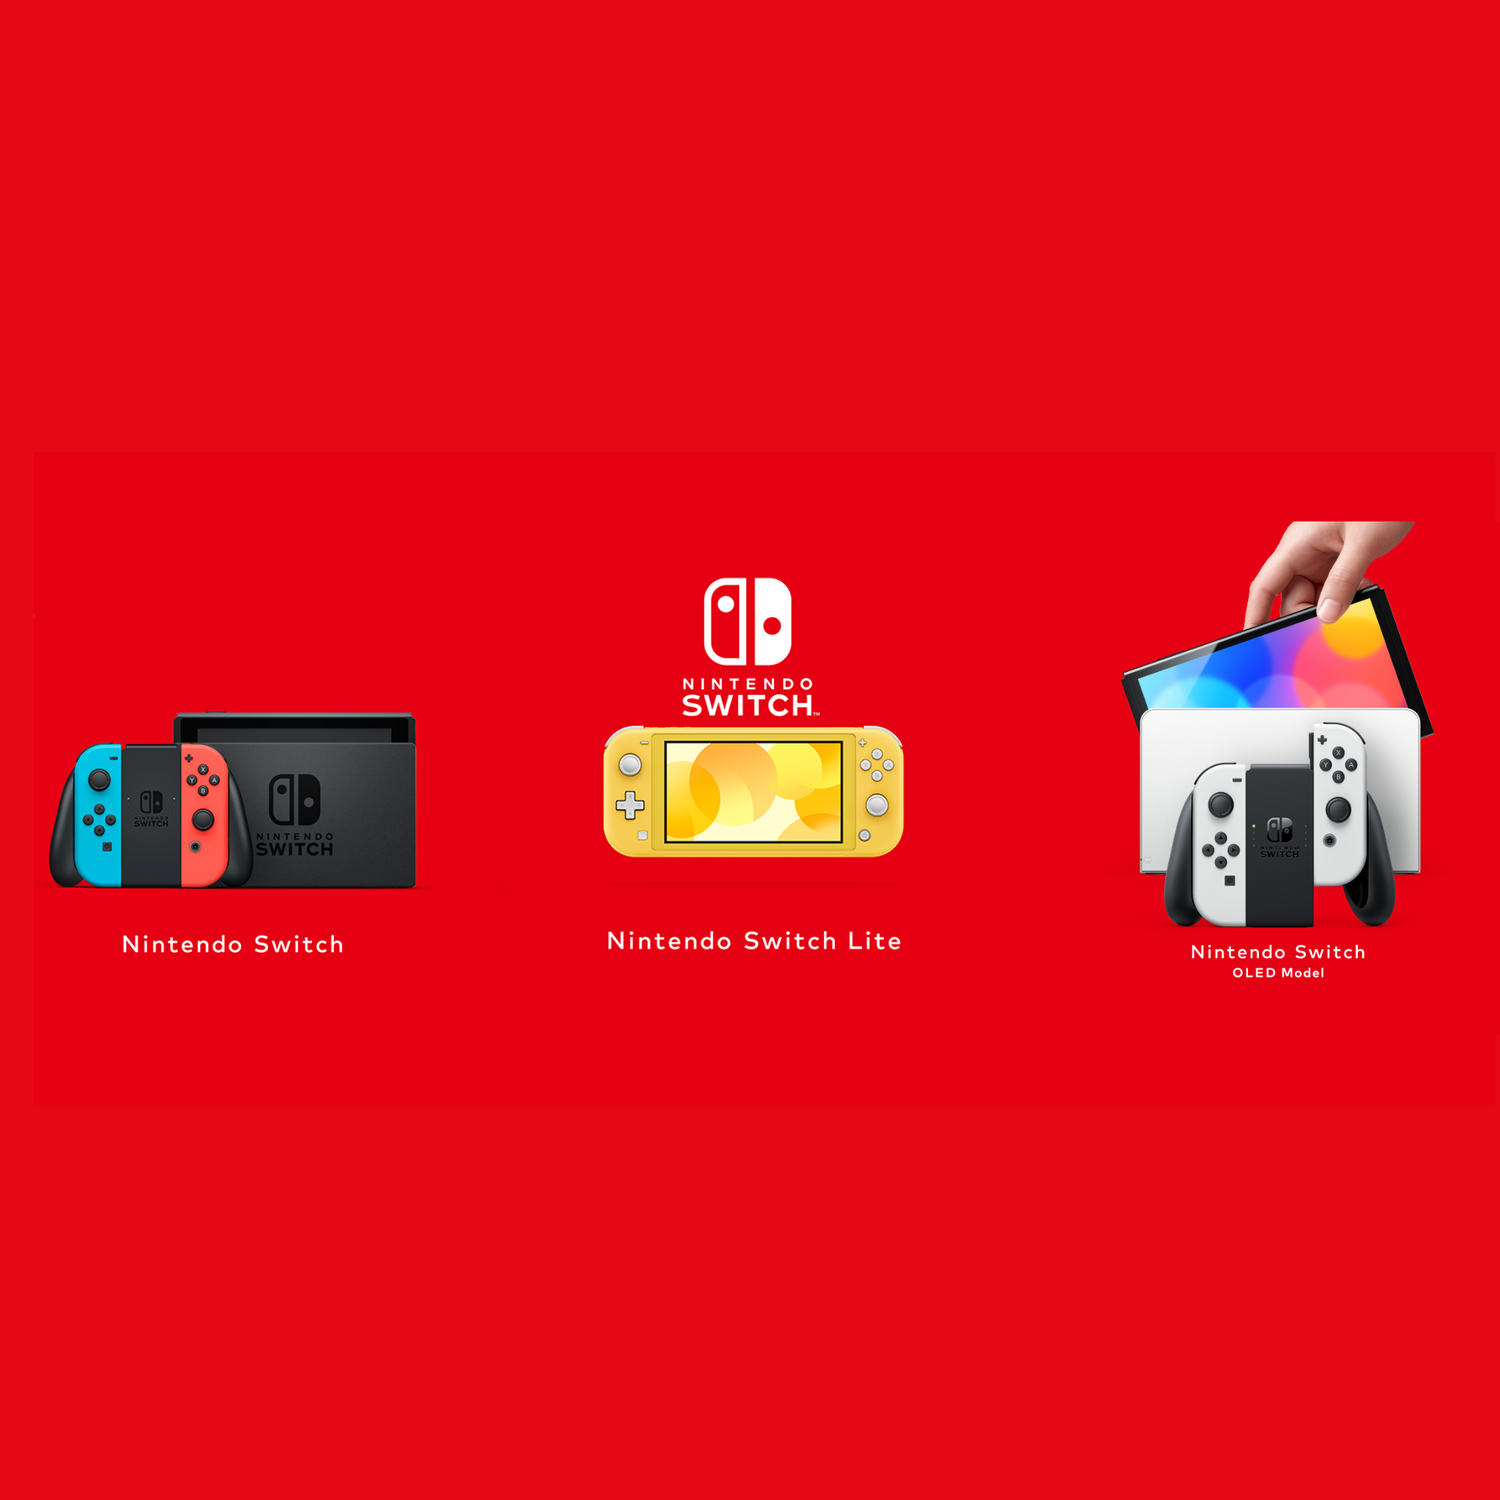 Nintendo Switch Accessories